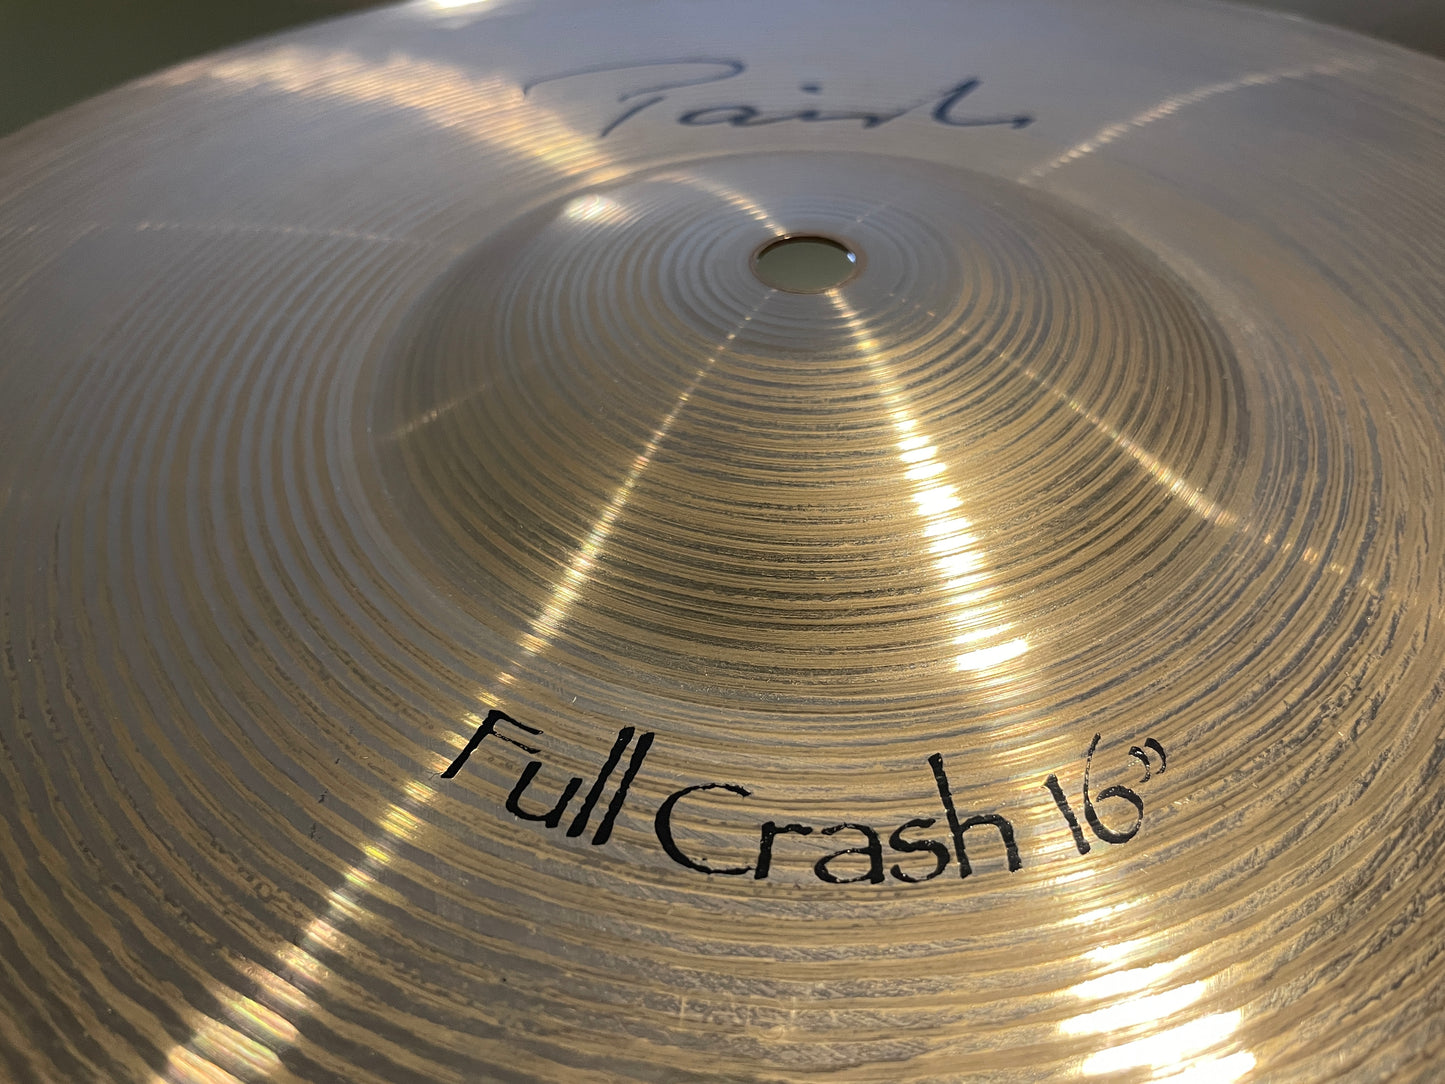 16" Paiste Signature Full Crash Cymbal 998g